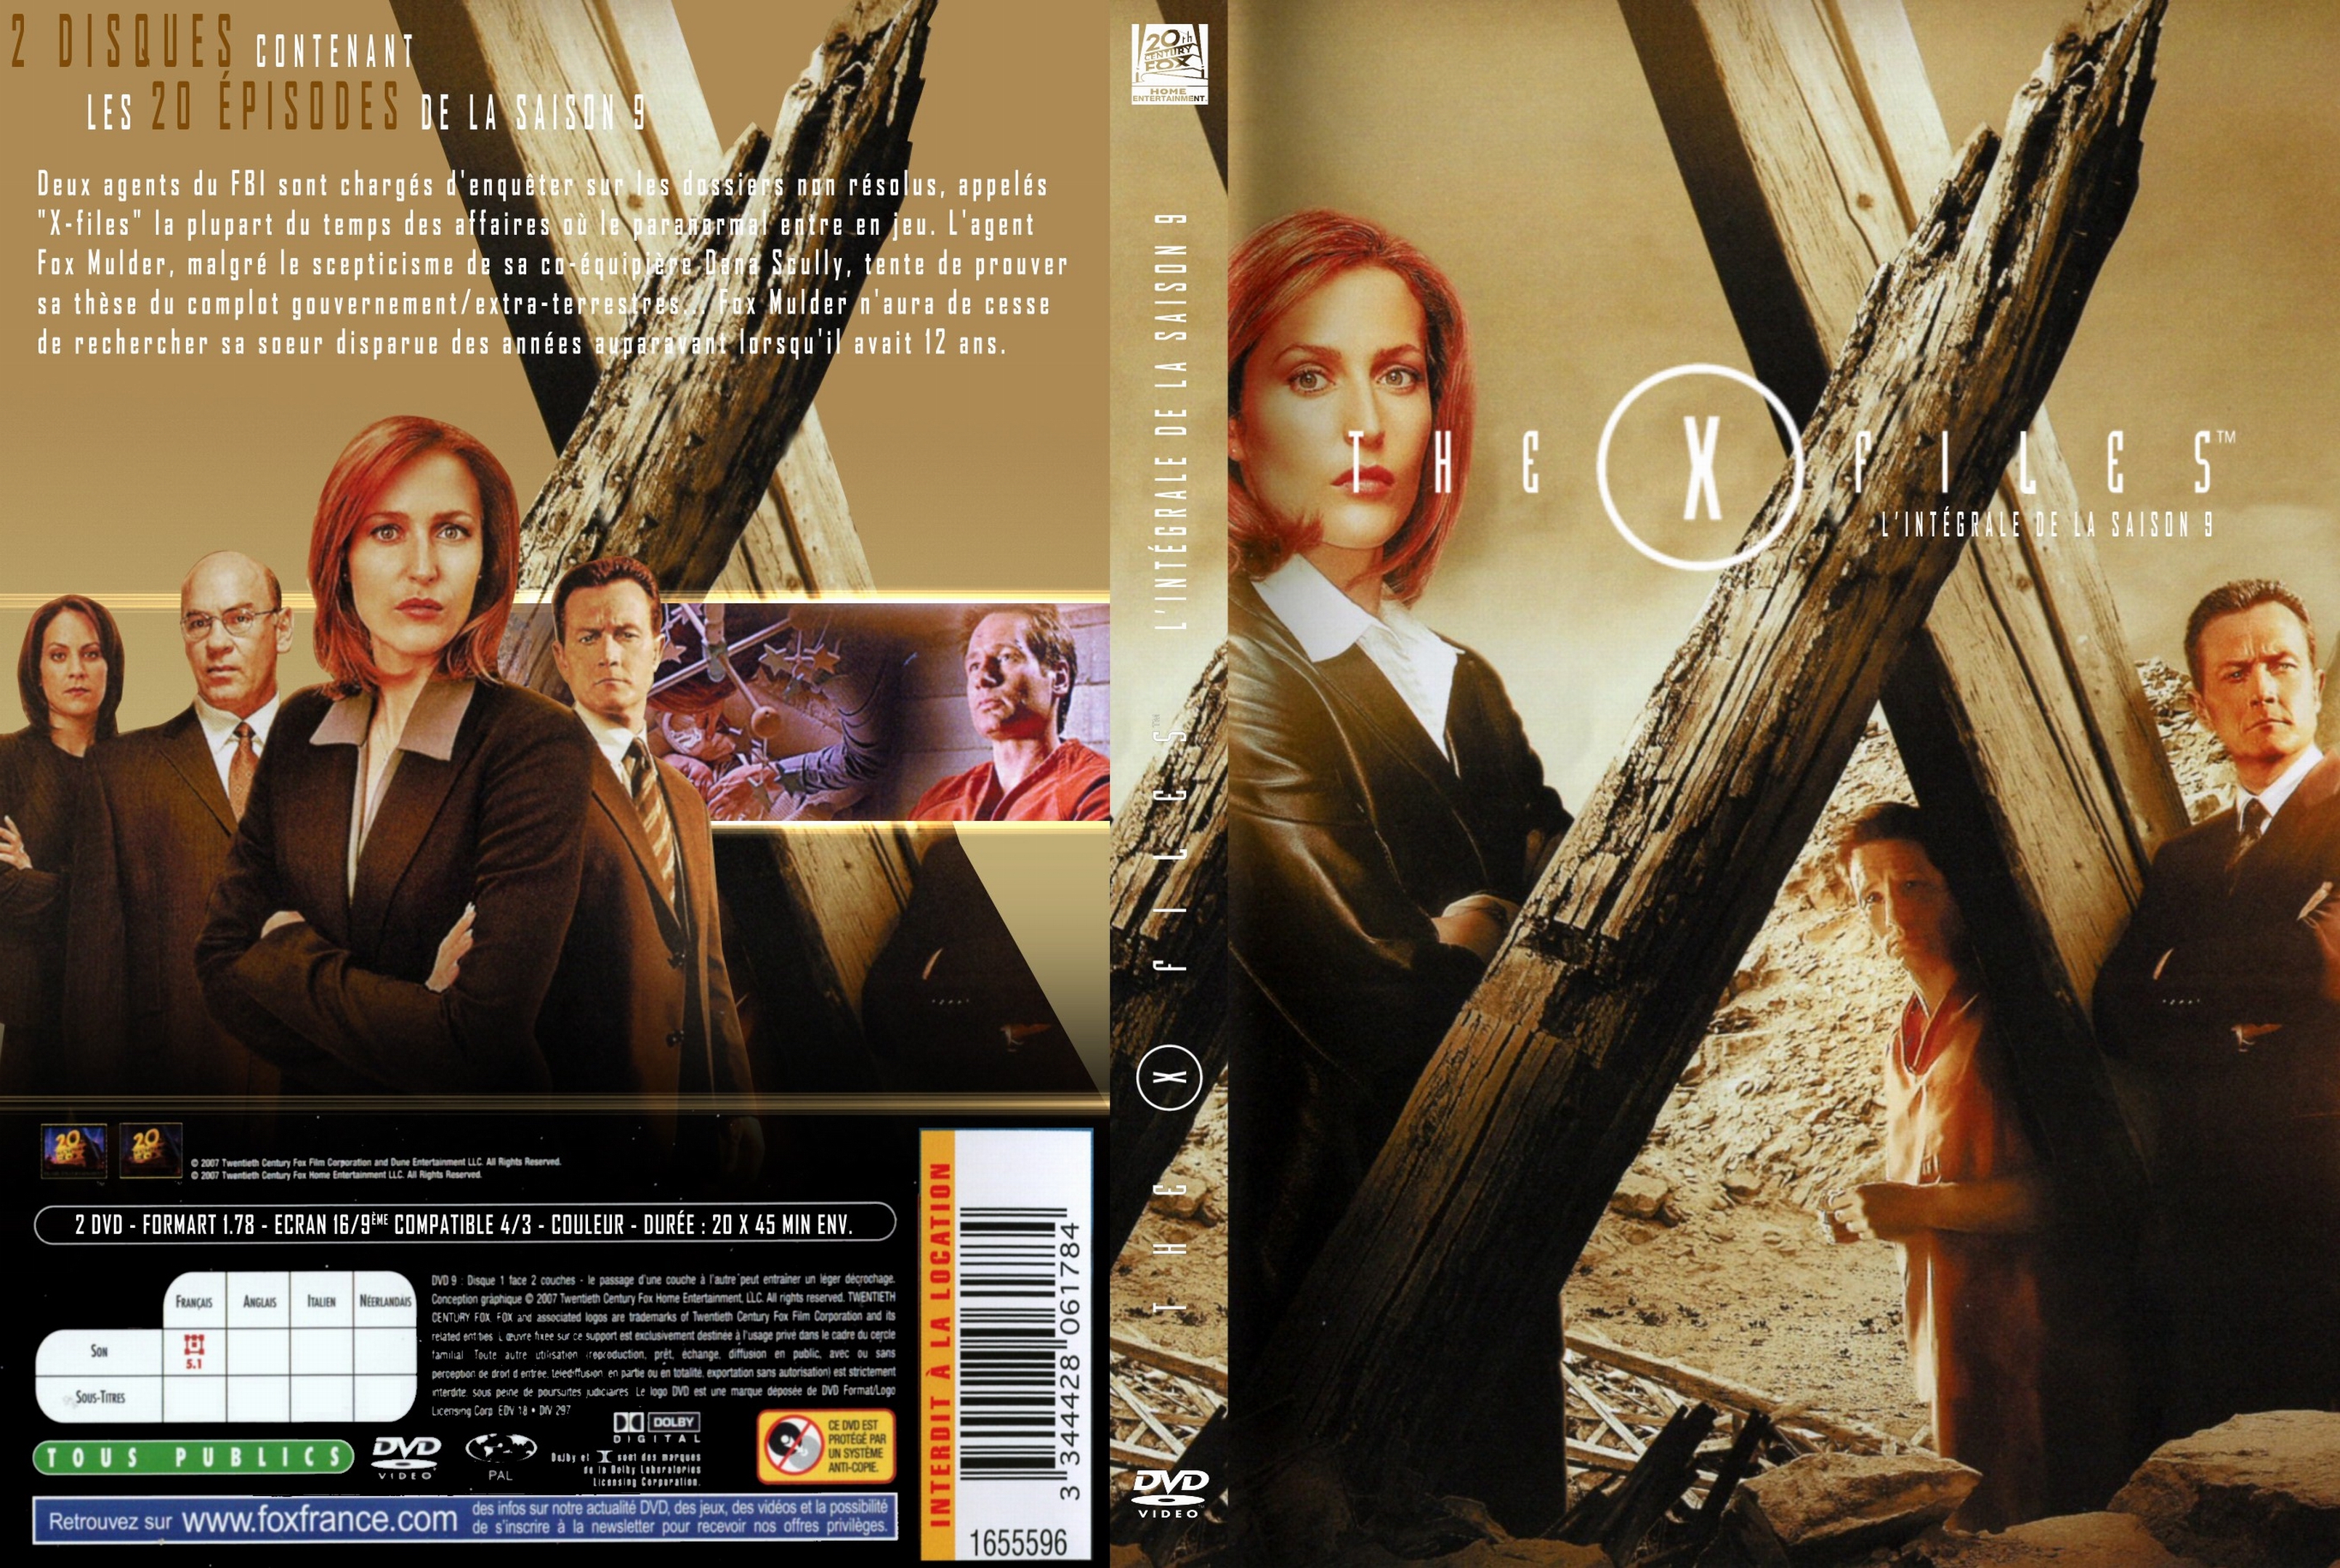 Jaquette DVD The X Files saison 9 custom